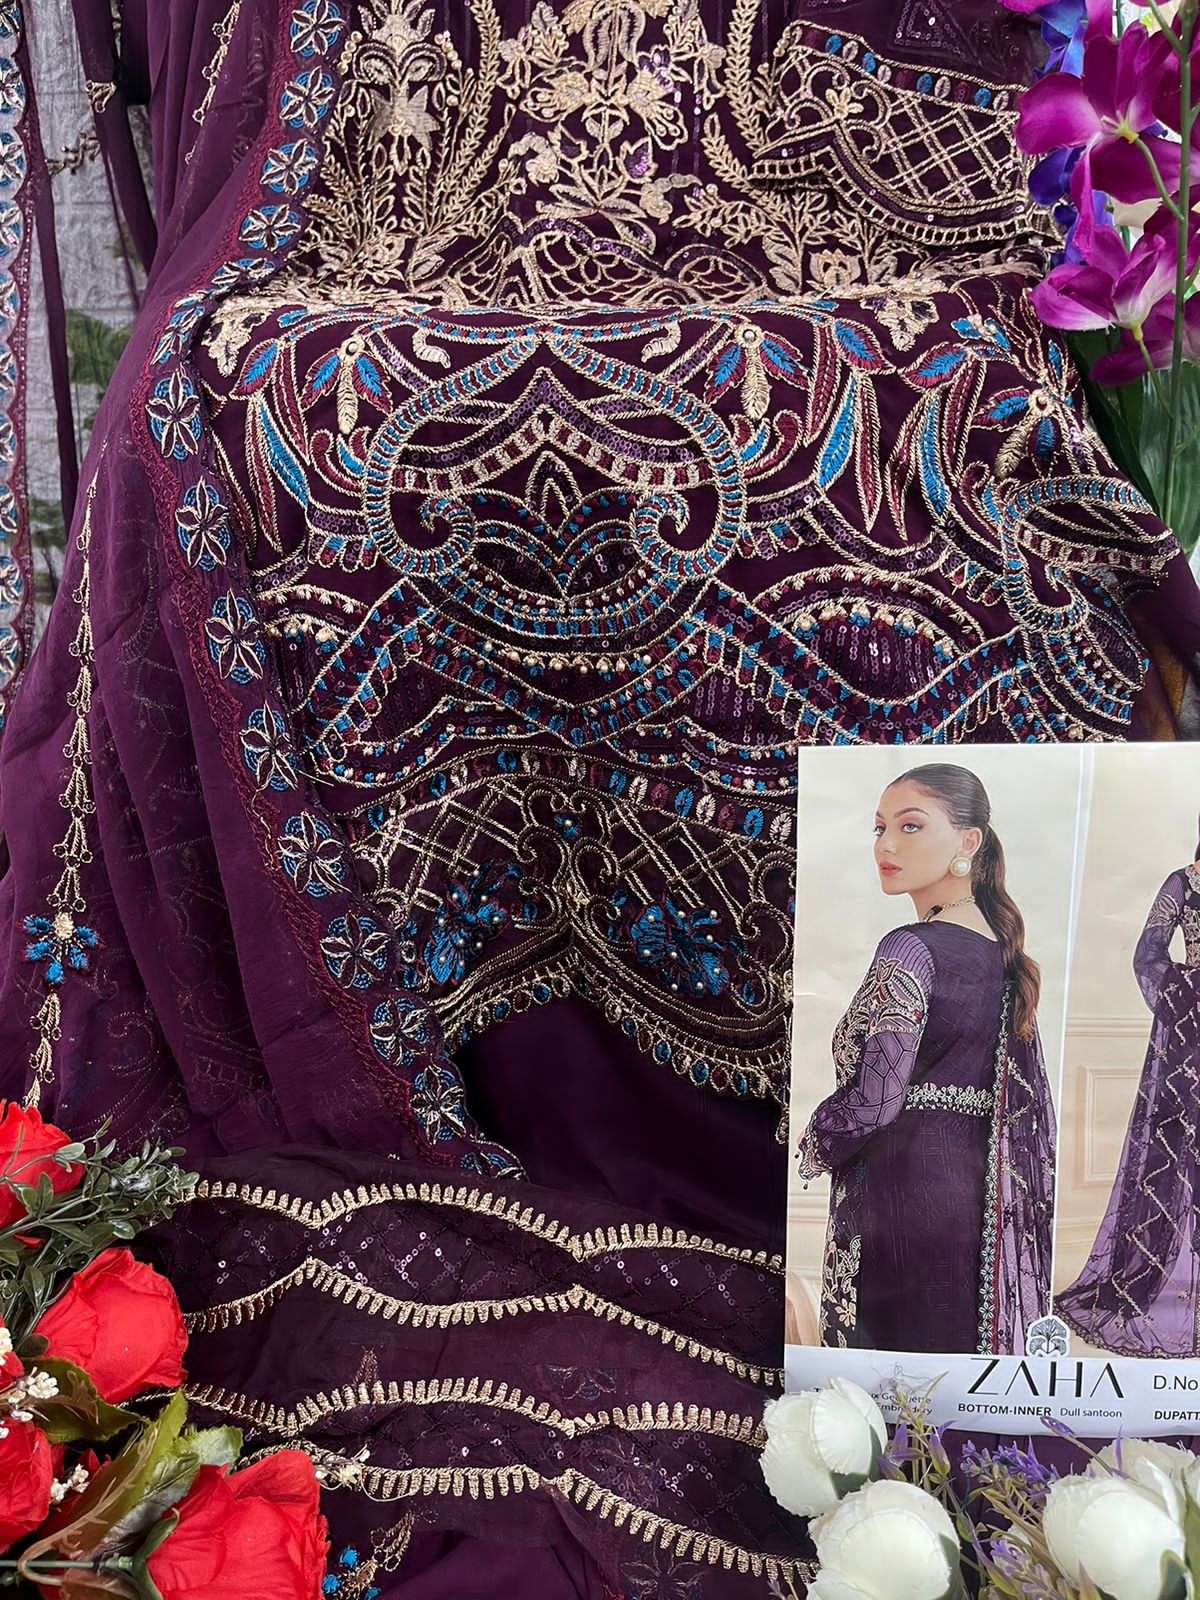 zaha ramsha vol-7 10130 series stylish look designer pakistani salwar wholesaler surat 